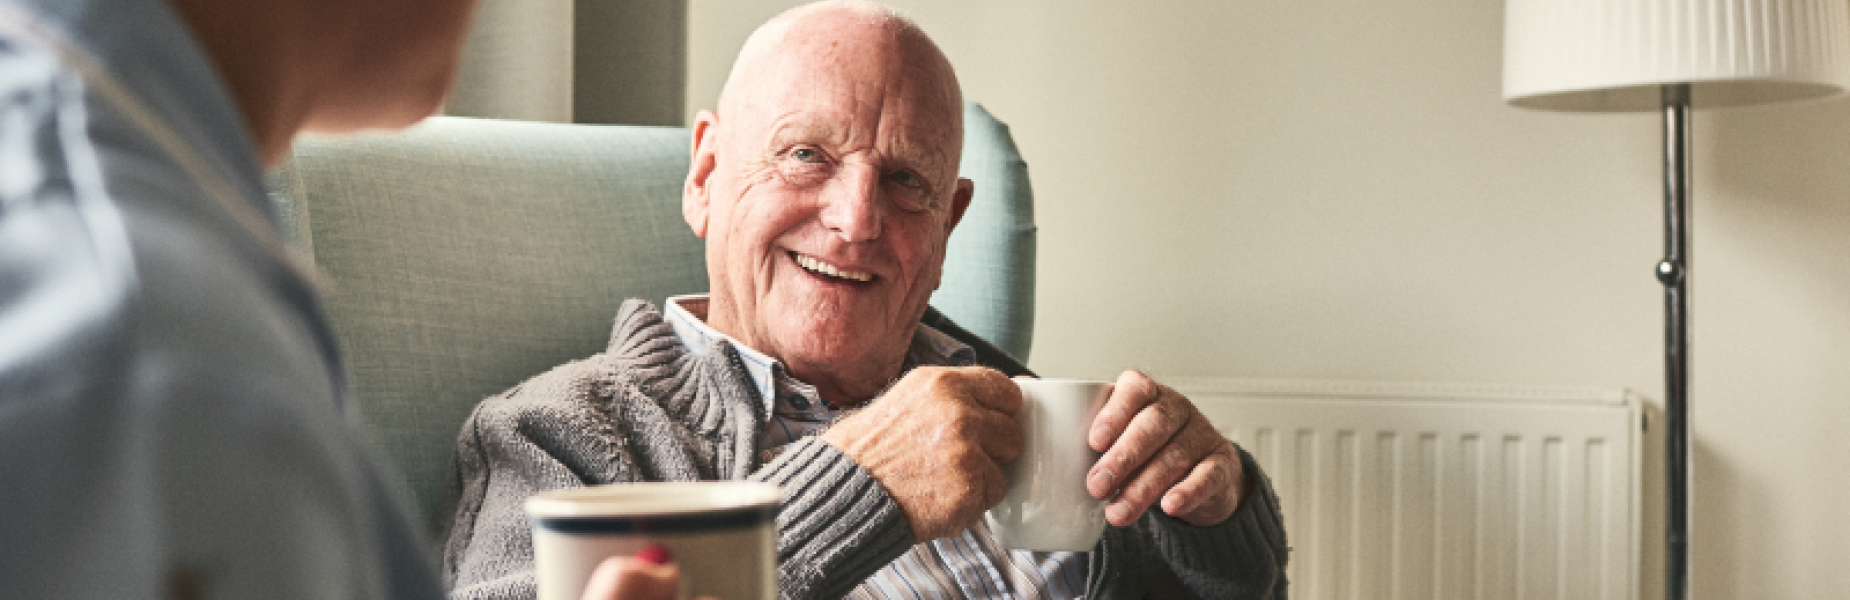 man smiling with a mug of tea